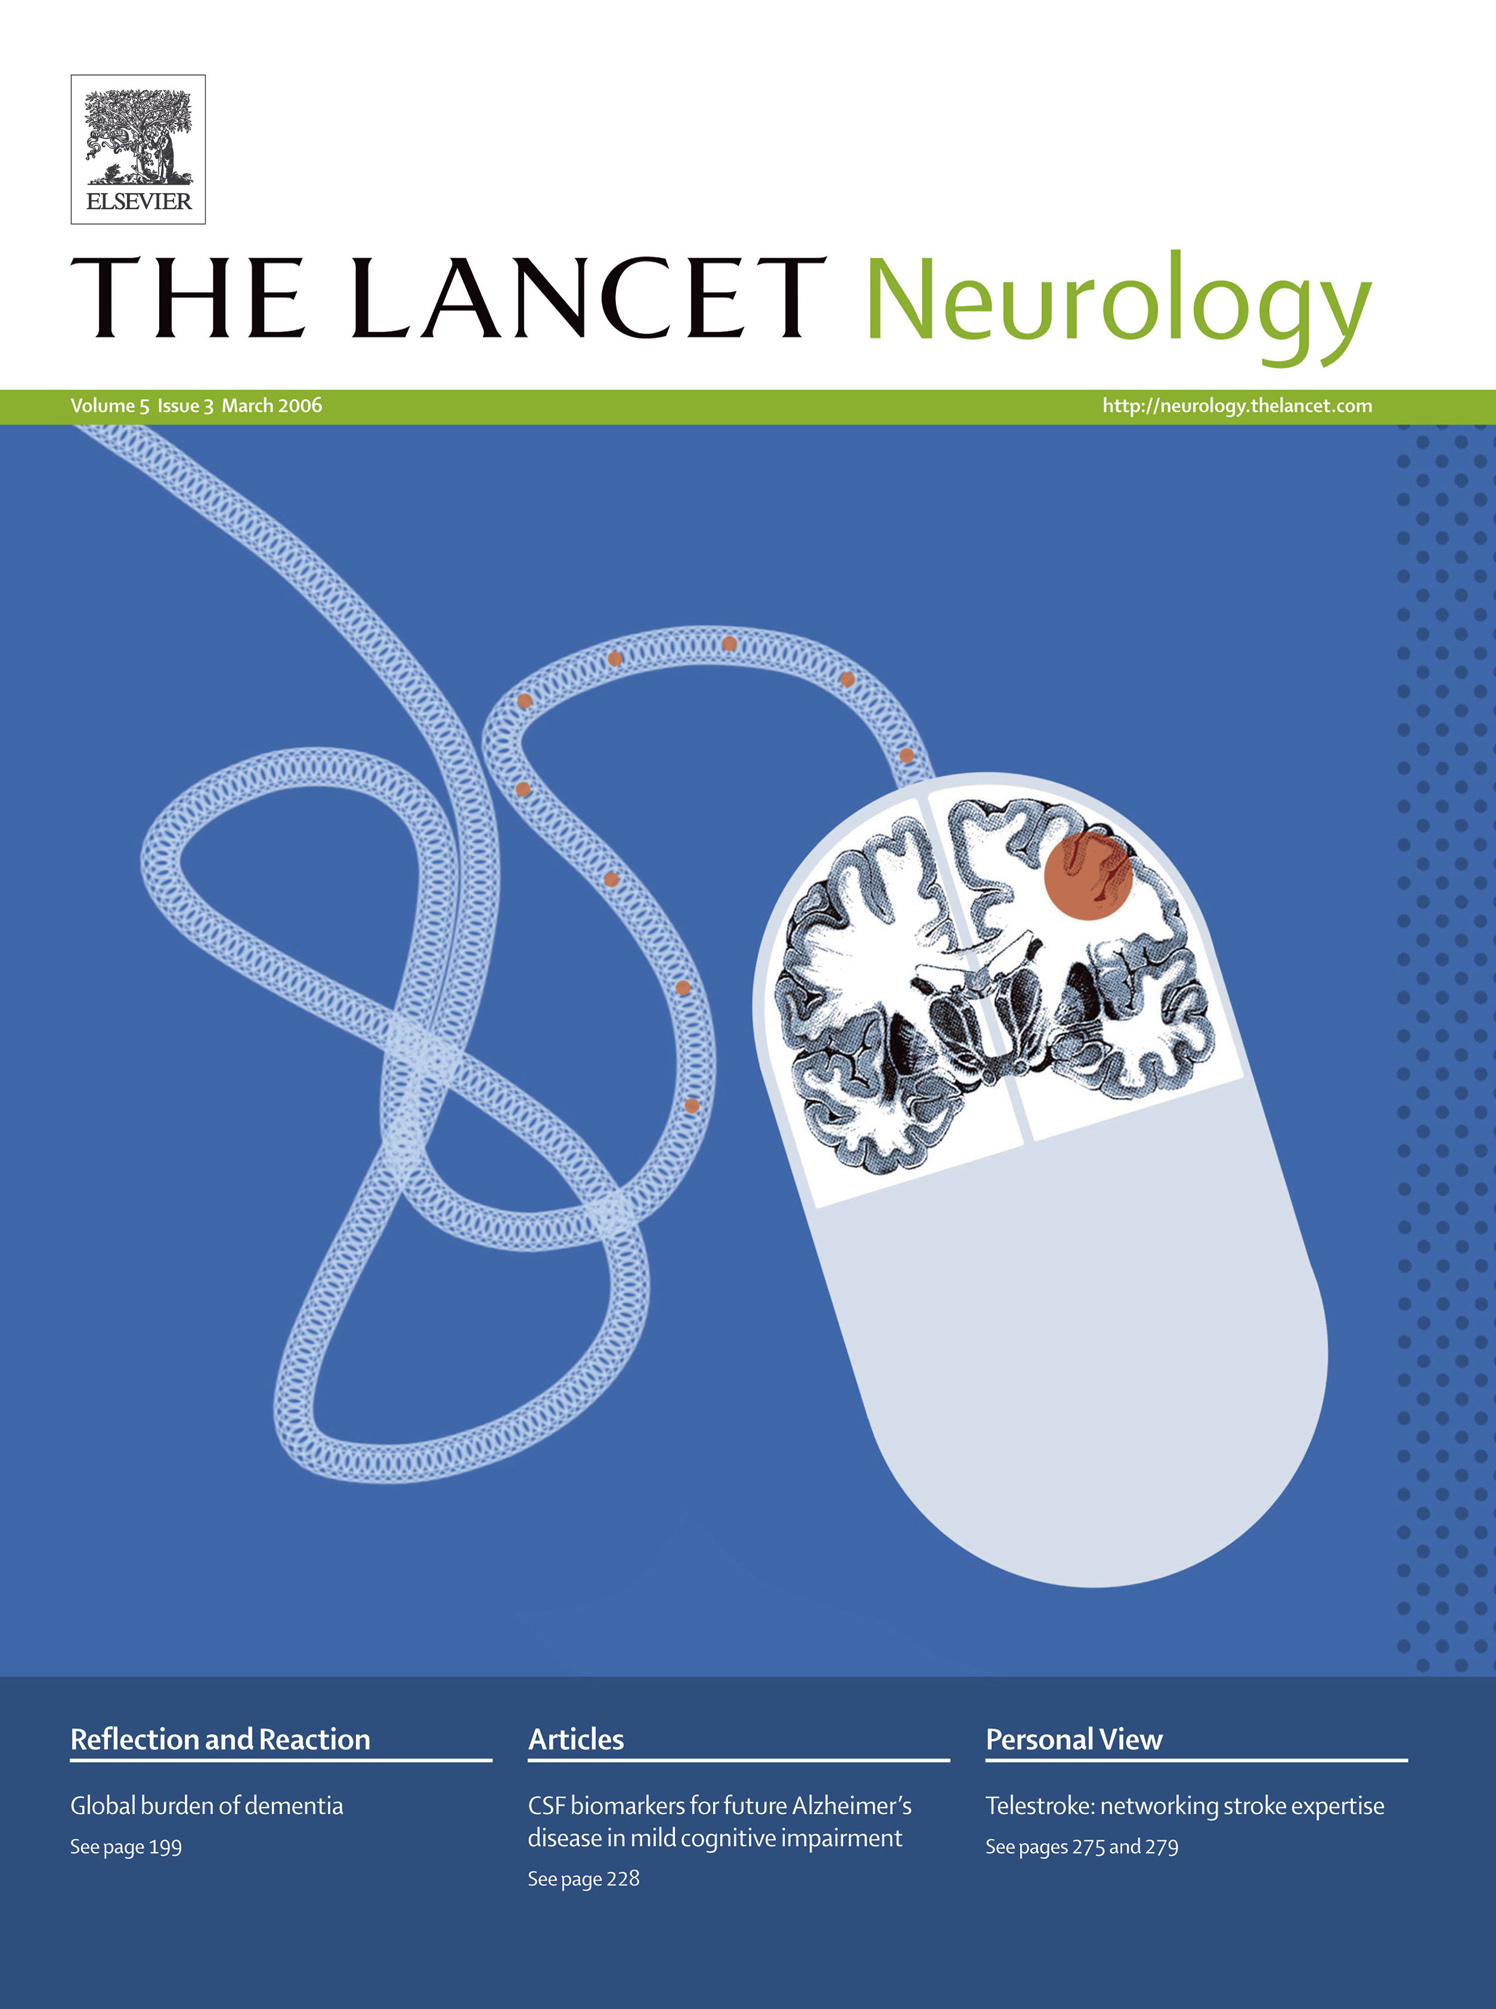 Tele stroke The Lancet Front Cover